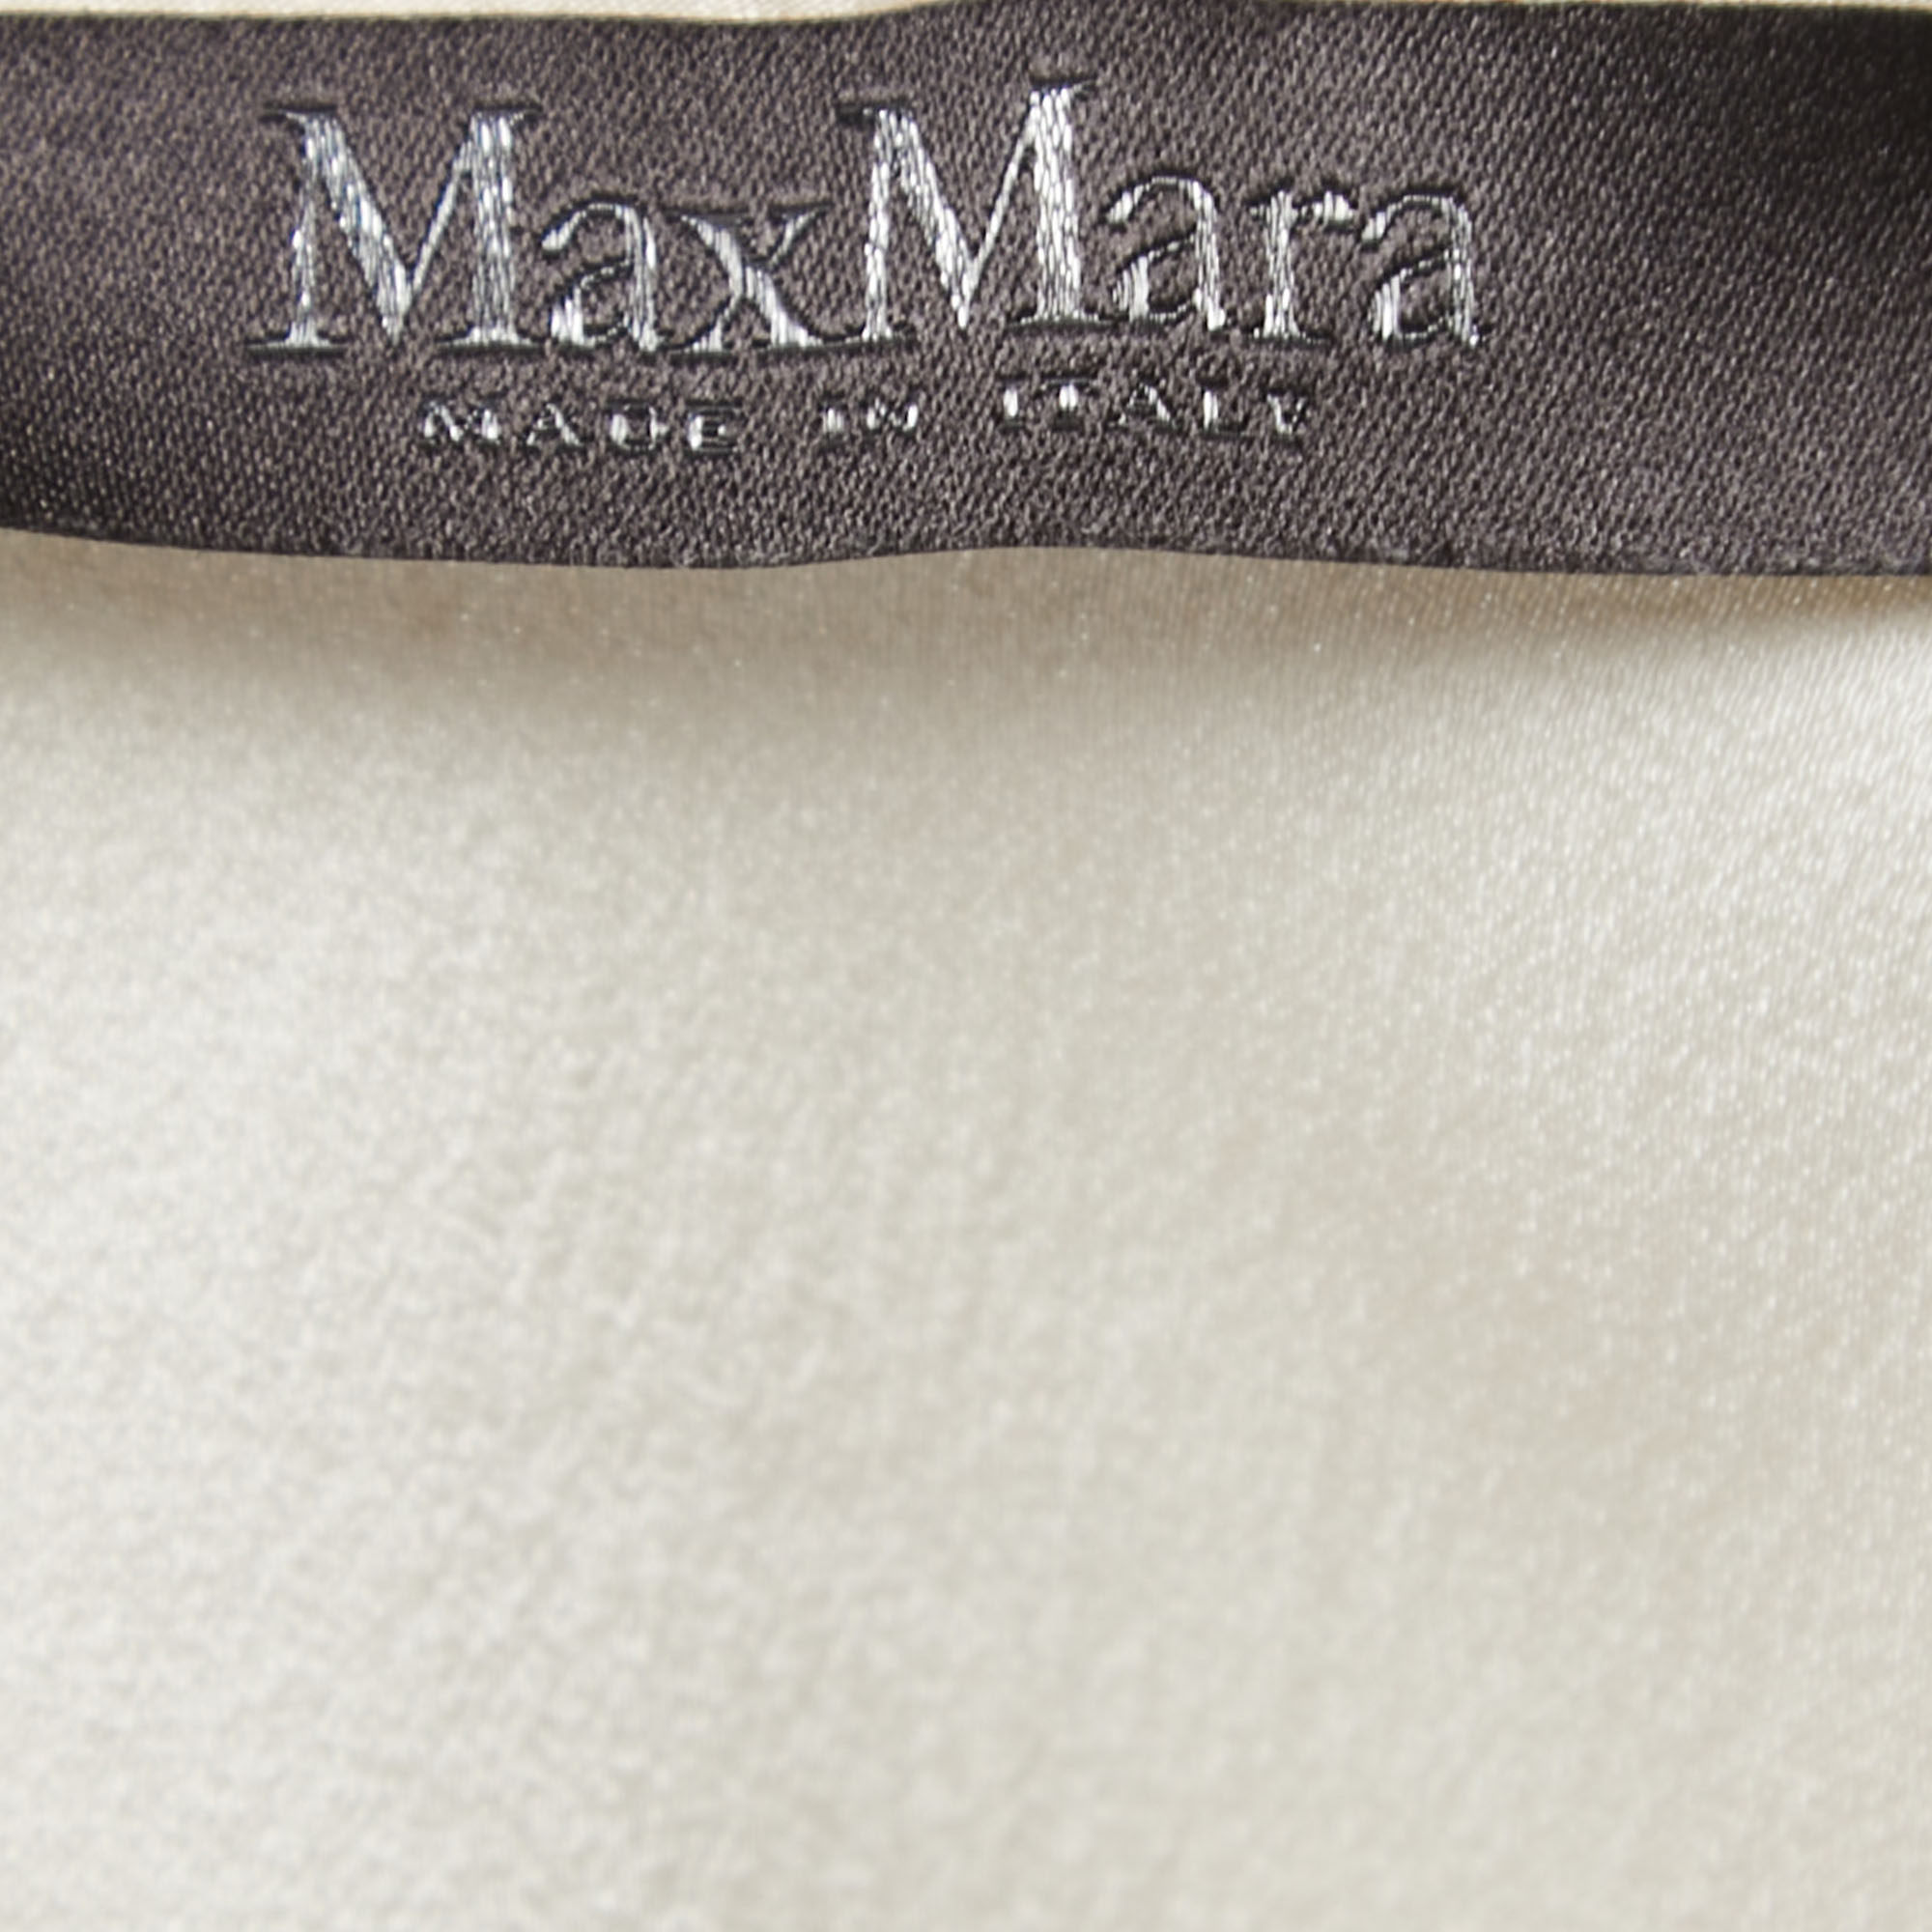 Max Mara Cream Embellished Crepe Sleeveless Top S